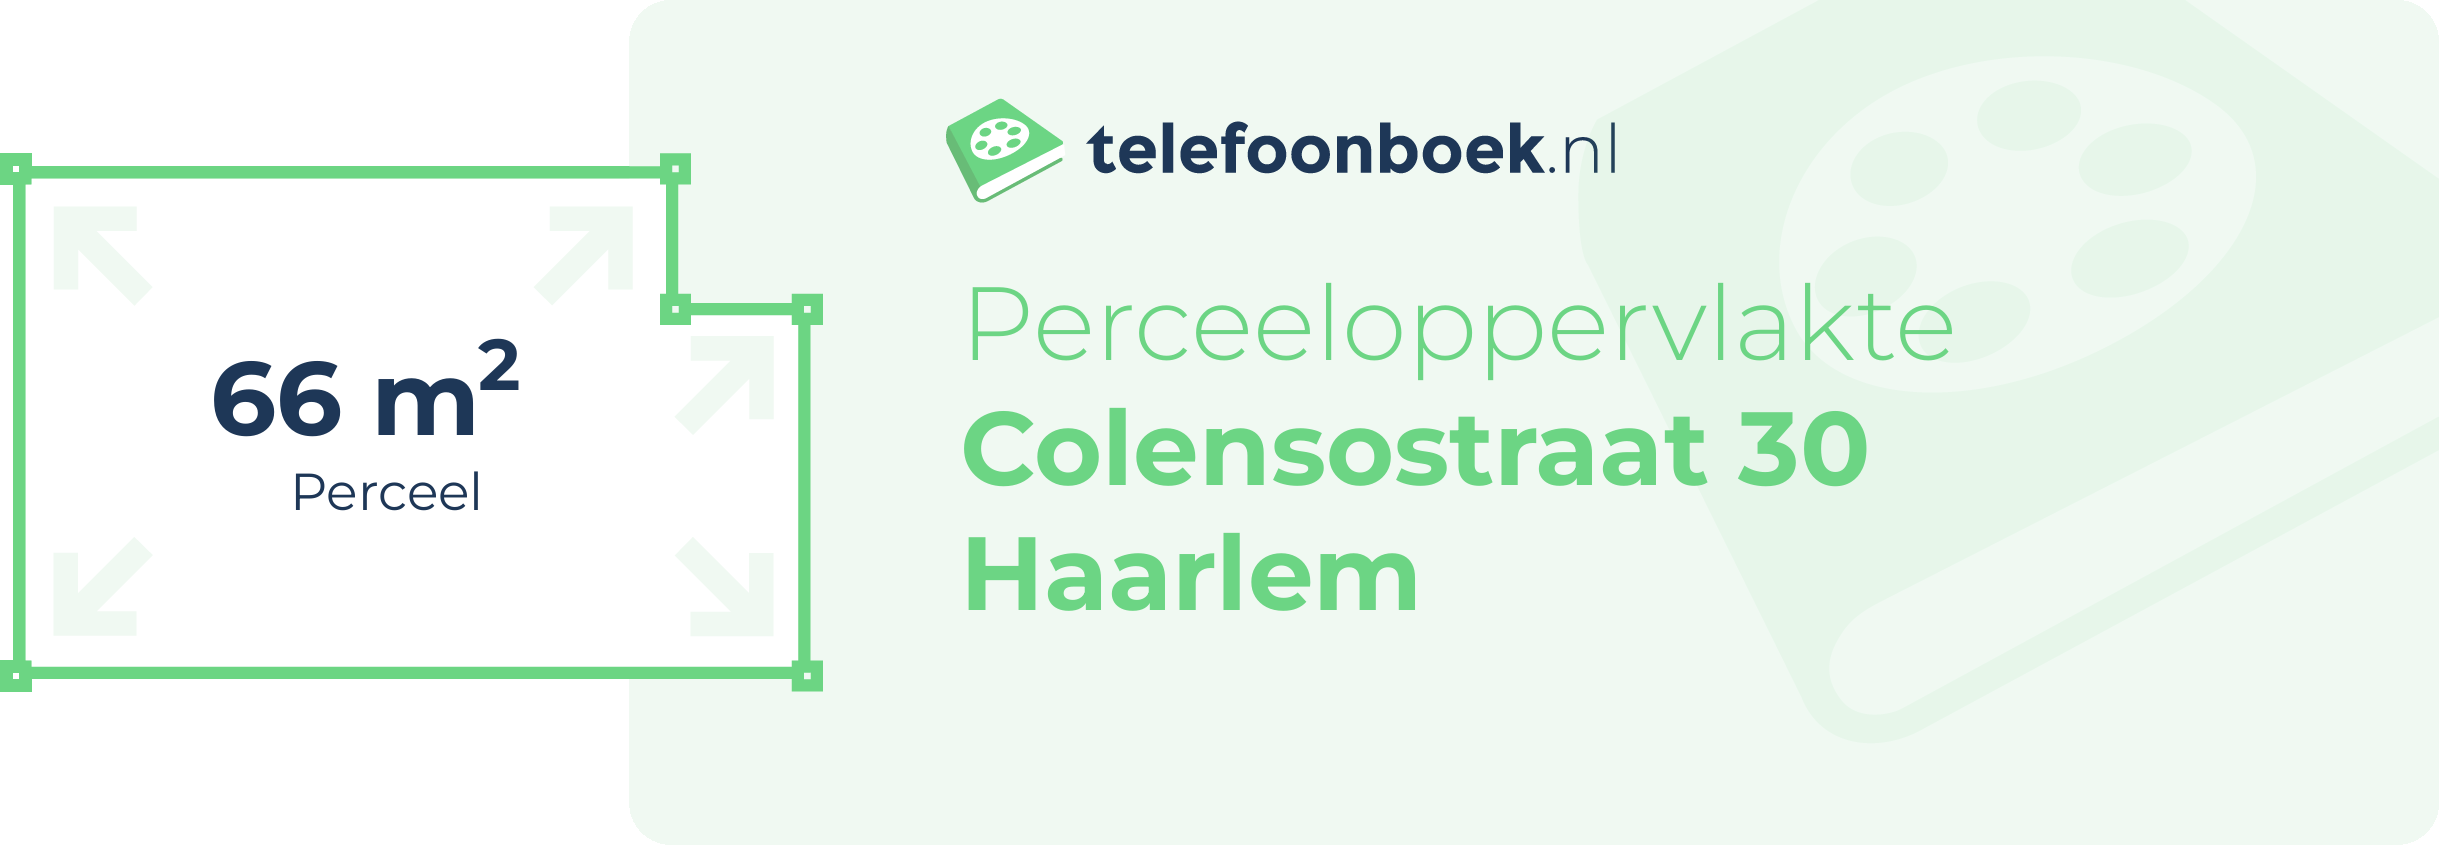 Perceeloppervlakte Colensostraat 30 Haarlem